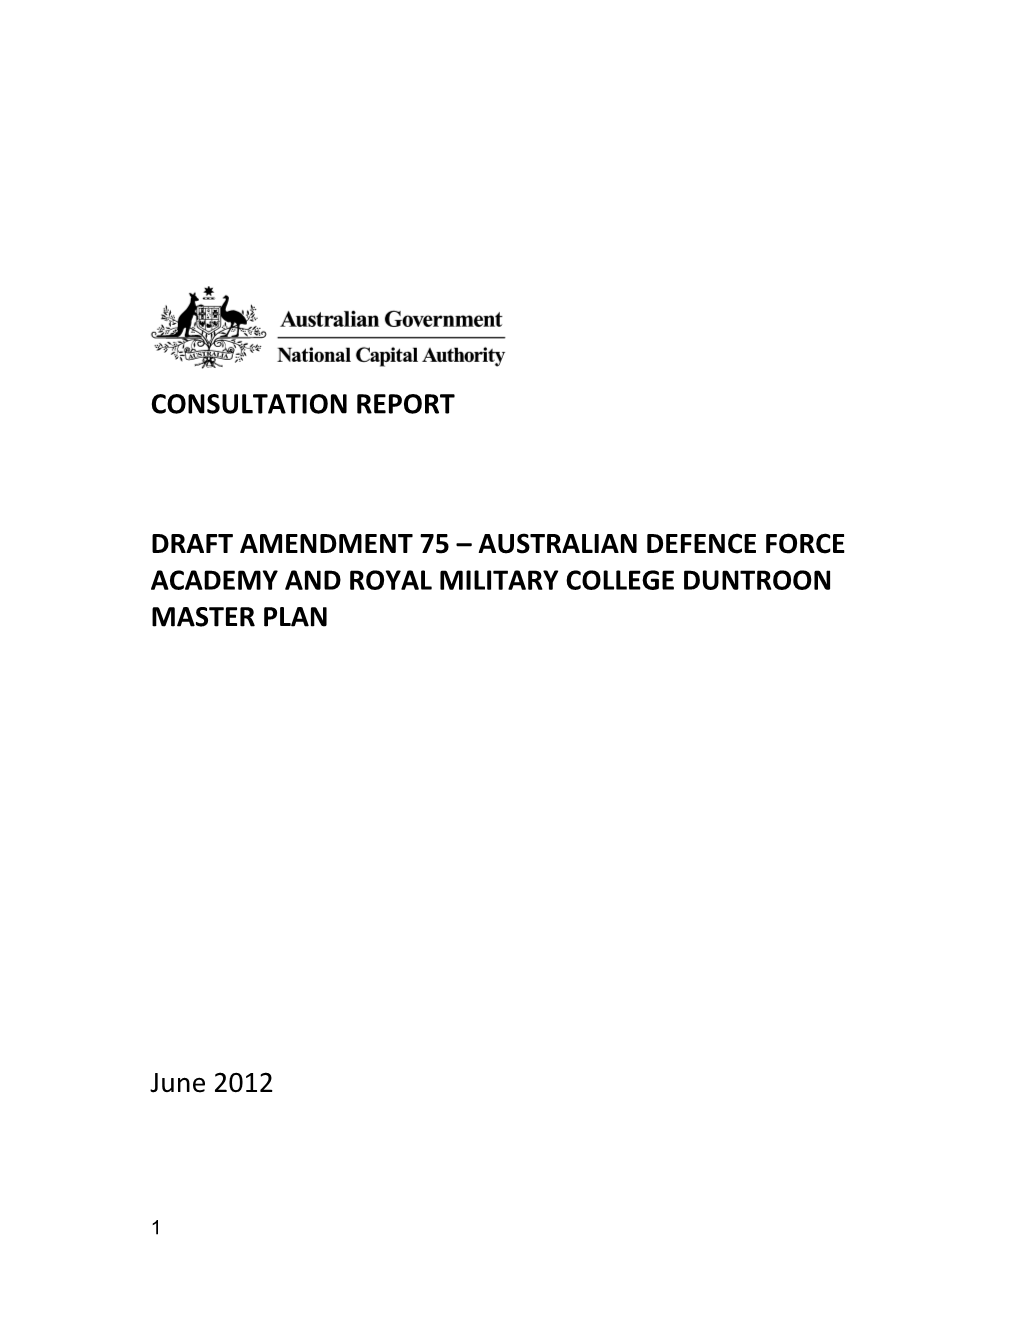 Draft Amendment 75 Australiandefenceforceacademy and Royalmilitarycollege Duntroon Master Plan